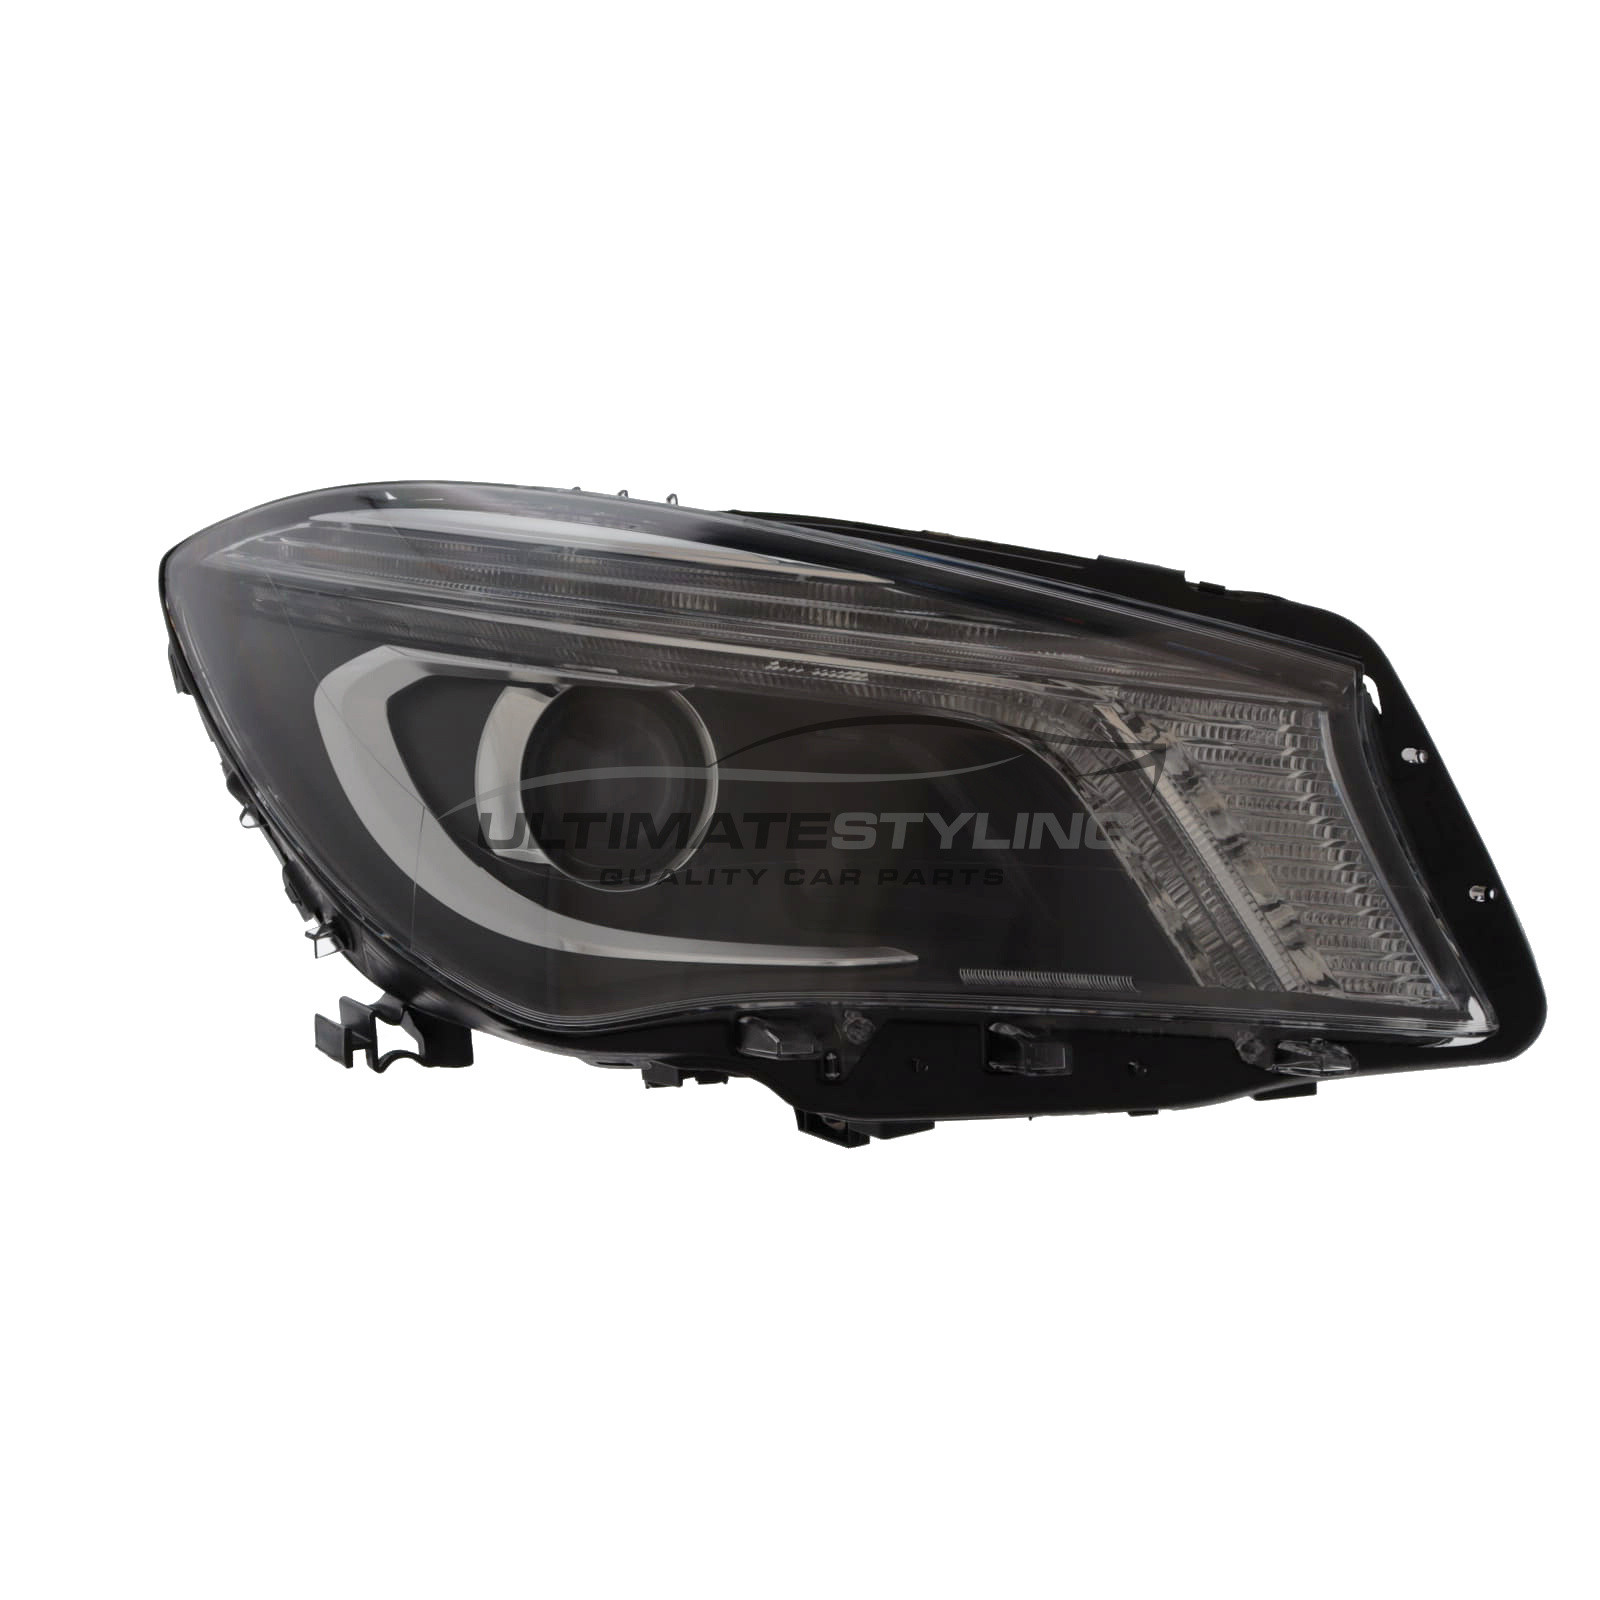 Mercedes Benz CLA Class Headlight / Headlamp - Drivers Side (RH) - Bi-Xenon With LED Indicator